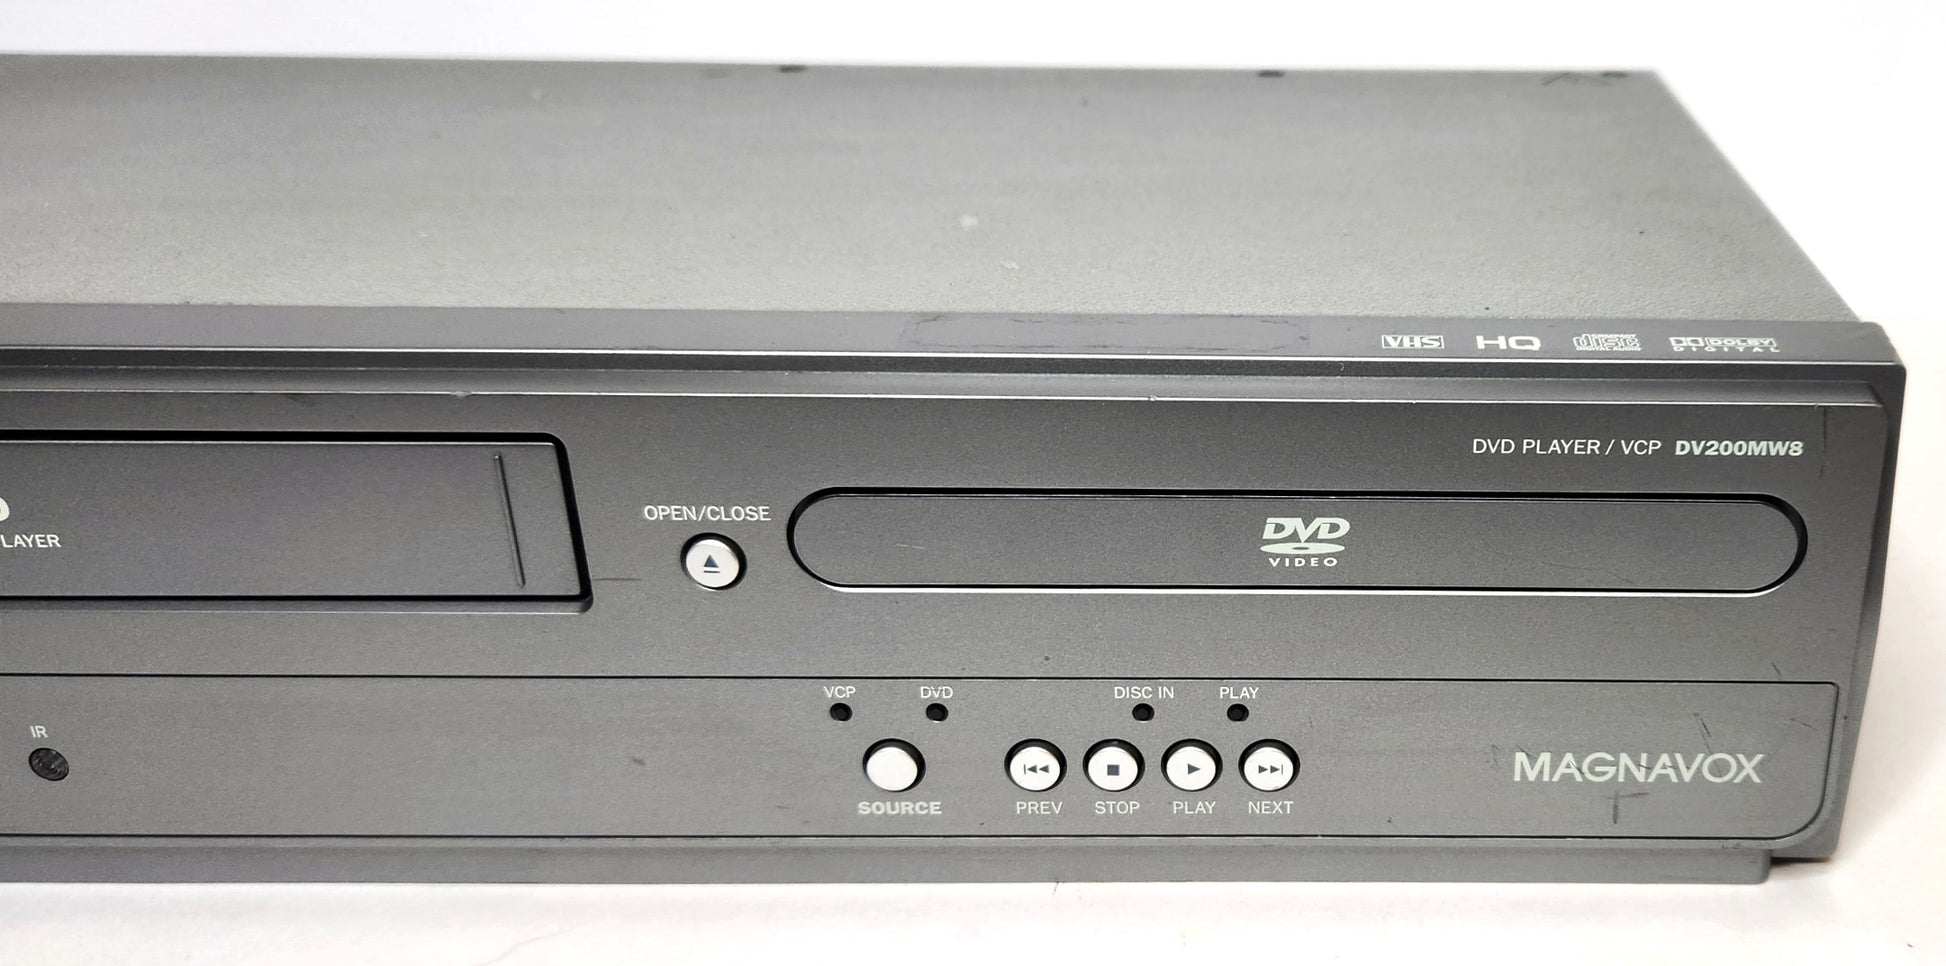 MAGNAVOX DV200MW8 DVD/VHS Combo Reproductor (renovado)